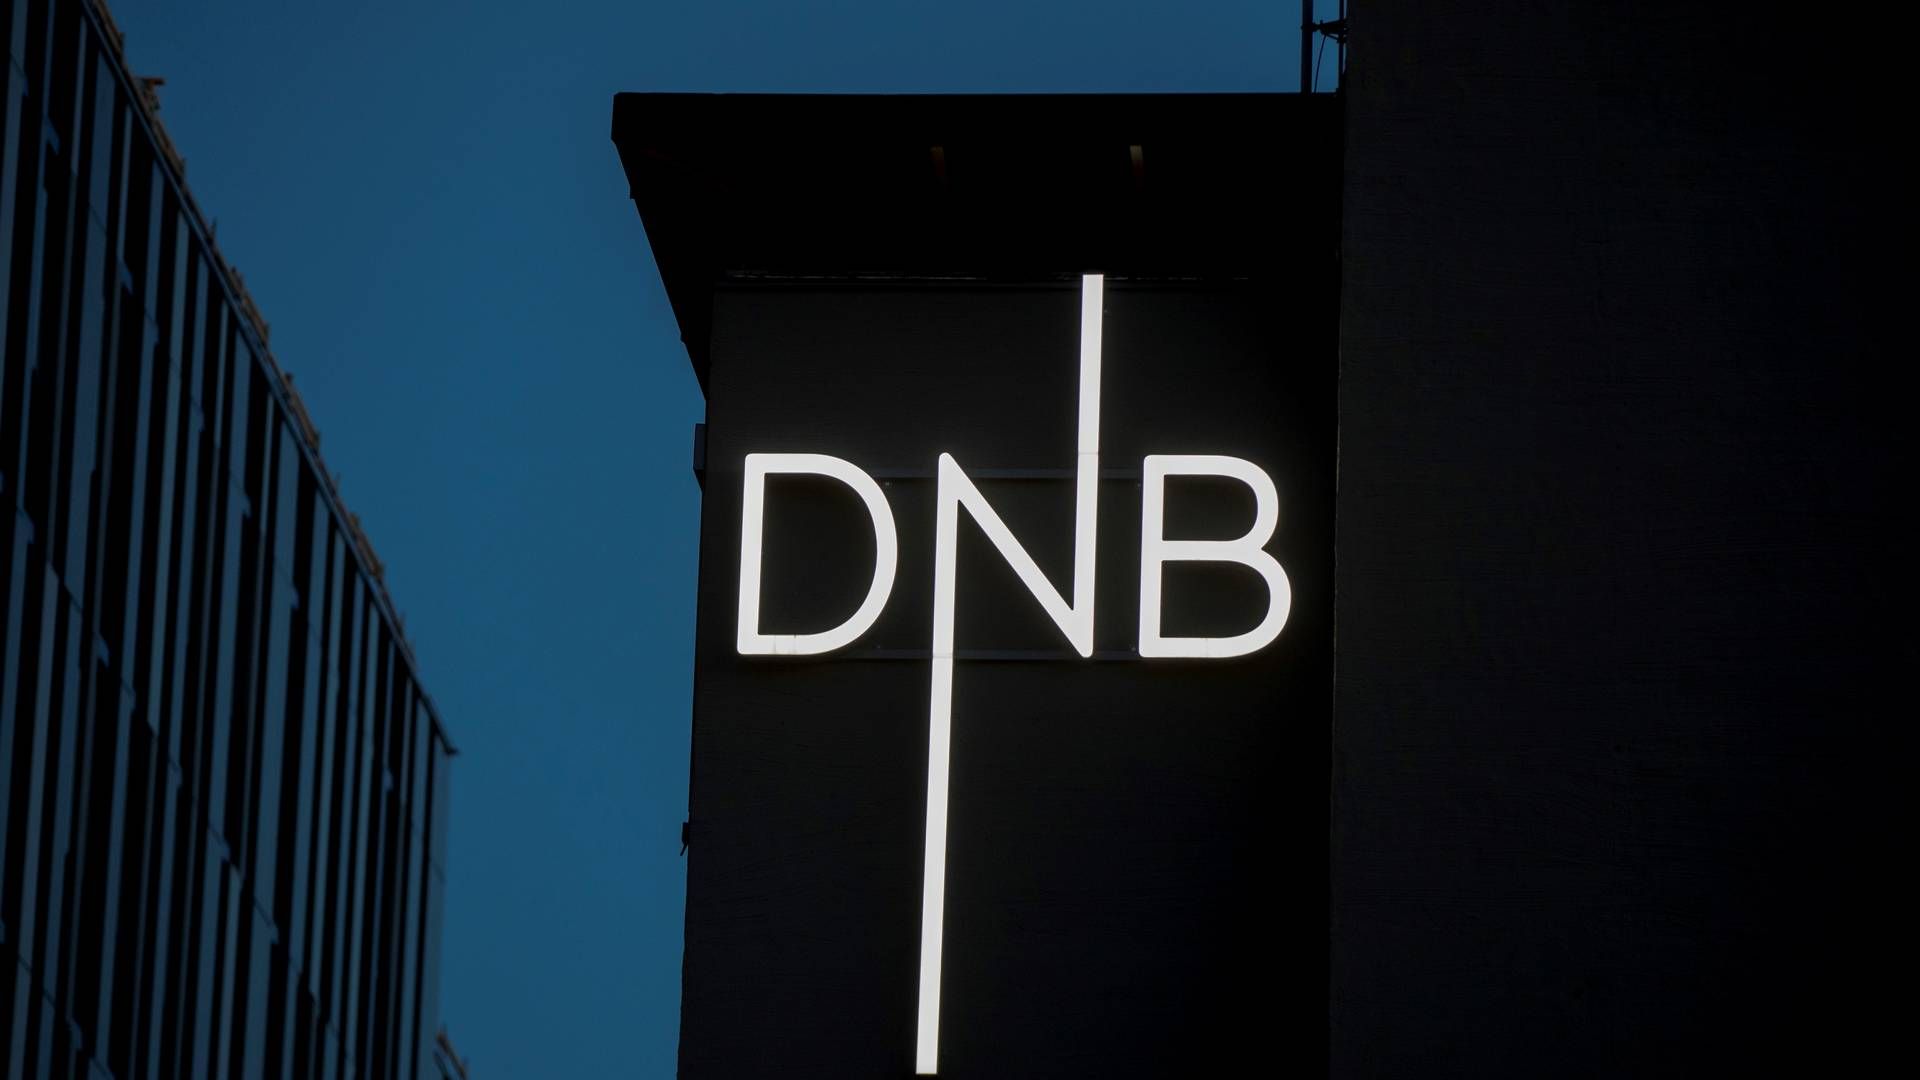 DNB i Litauen opplevde mandag et dataangrep. Russiske hackere står trolig bak. | Foto: Vidar Ruud / NTB